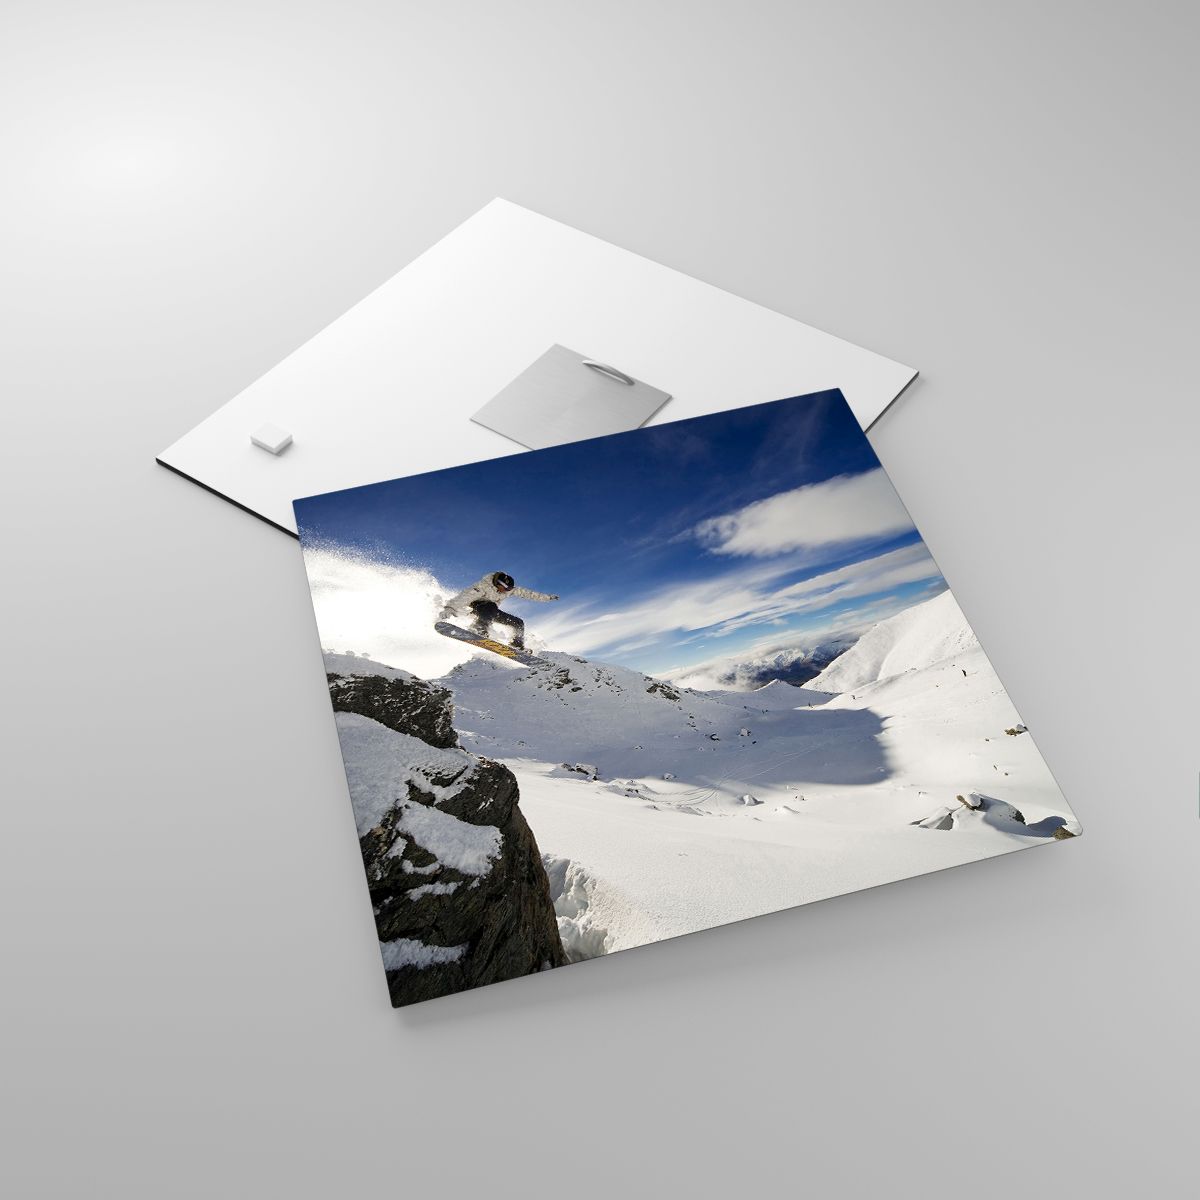 Glasbild Snowboard, Glasbild Landschaft, Glasbild Berge, Glasbild Schnee, Glasbild Sport